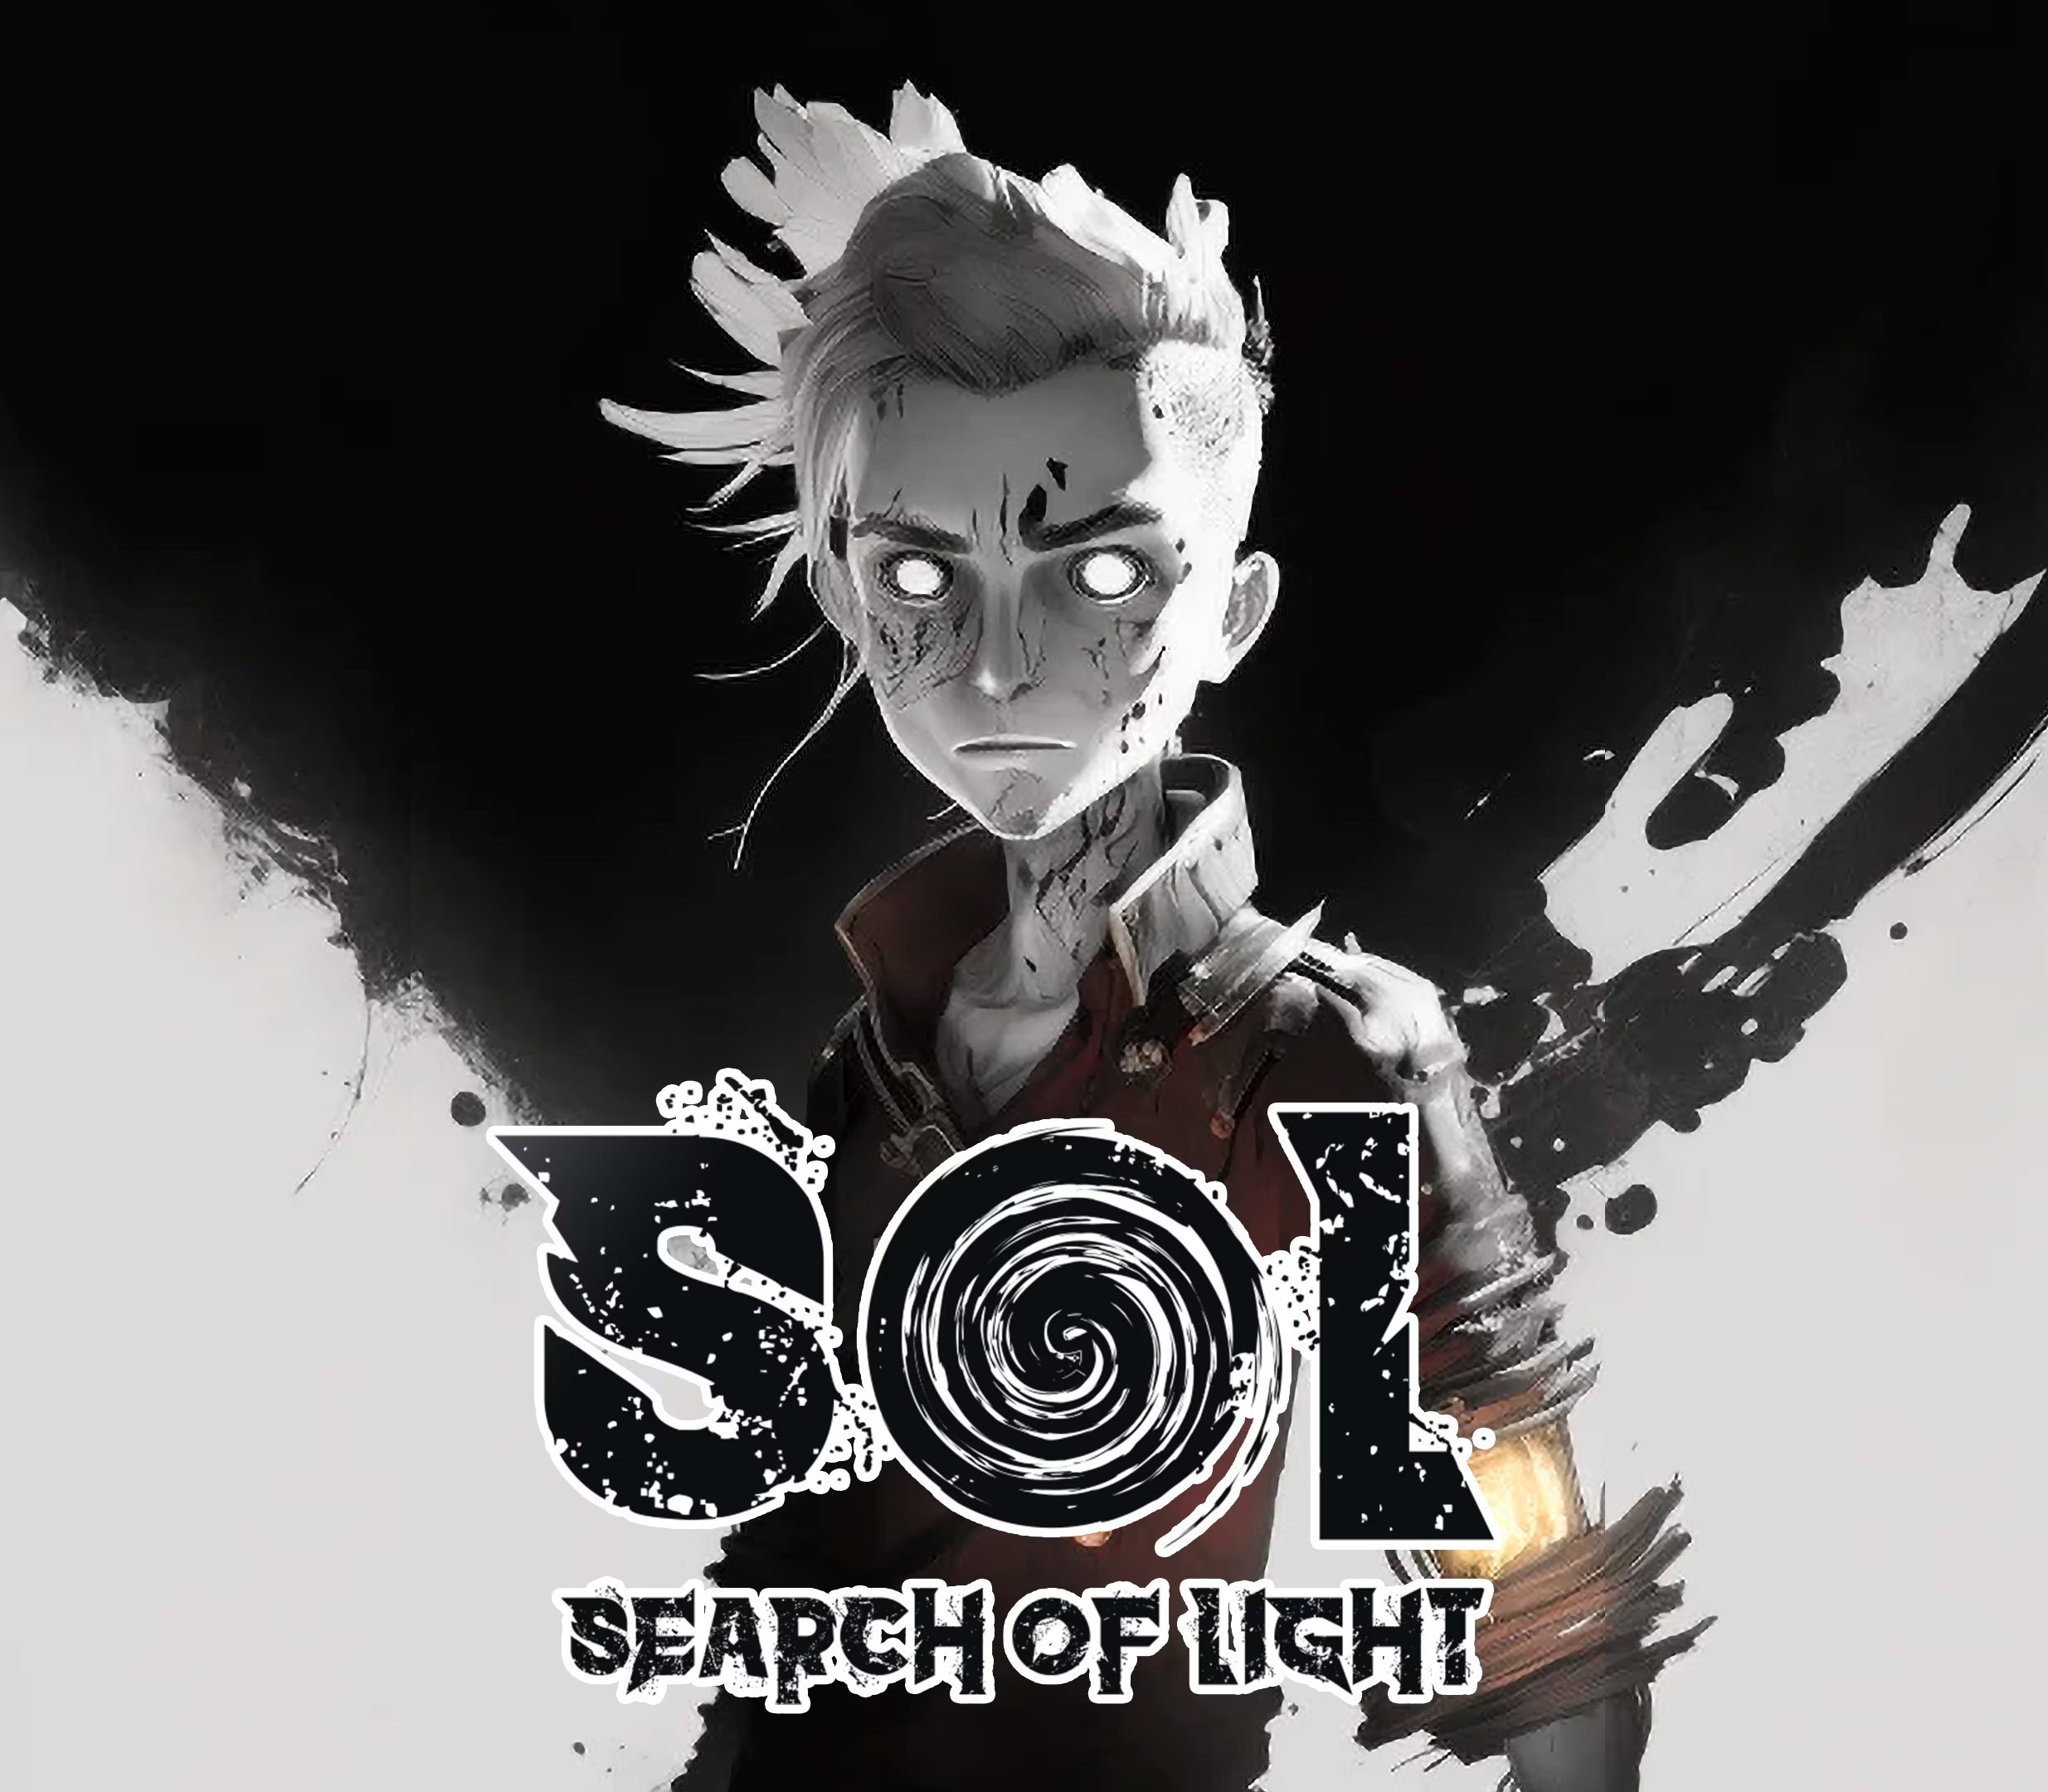 S.O.L Search of Light Steam